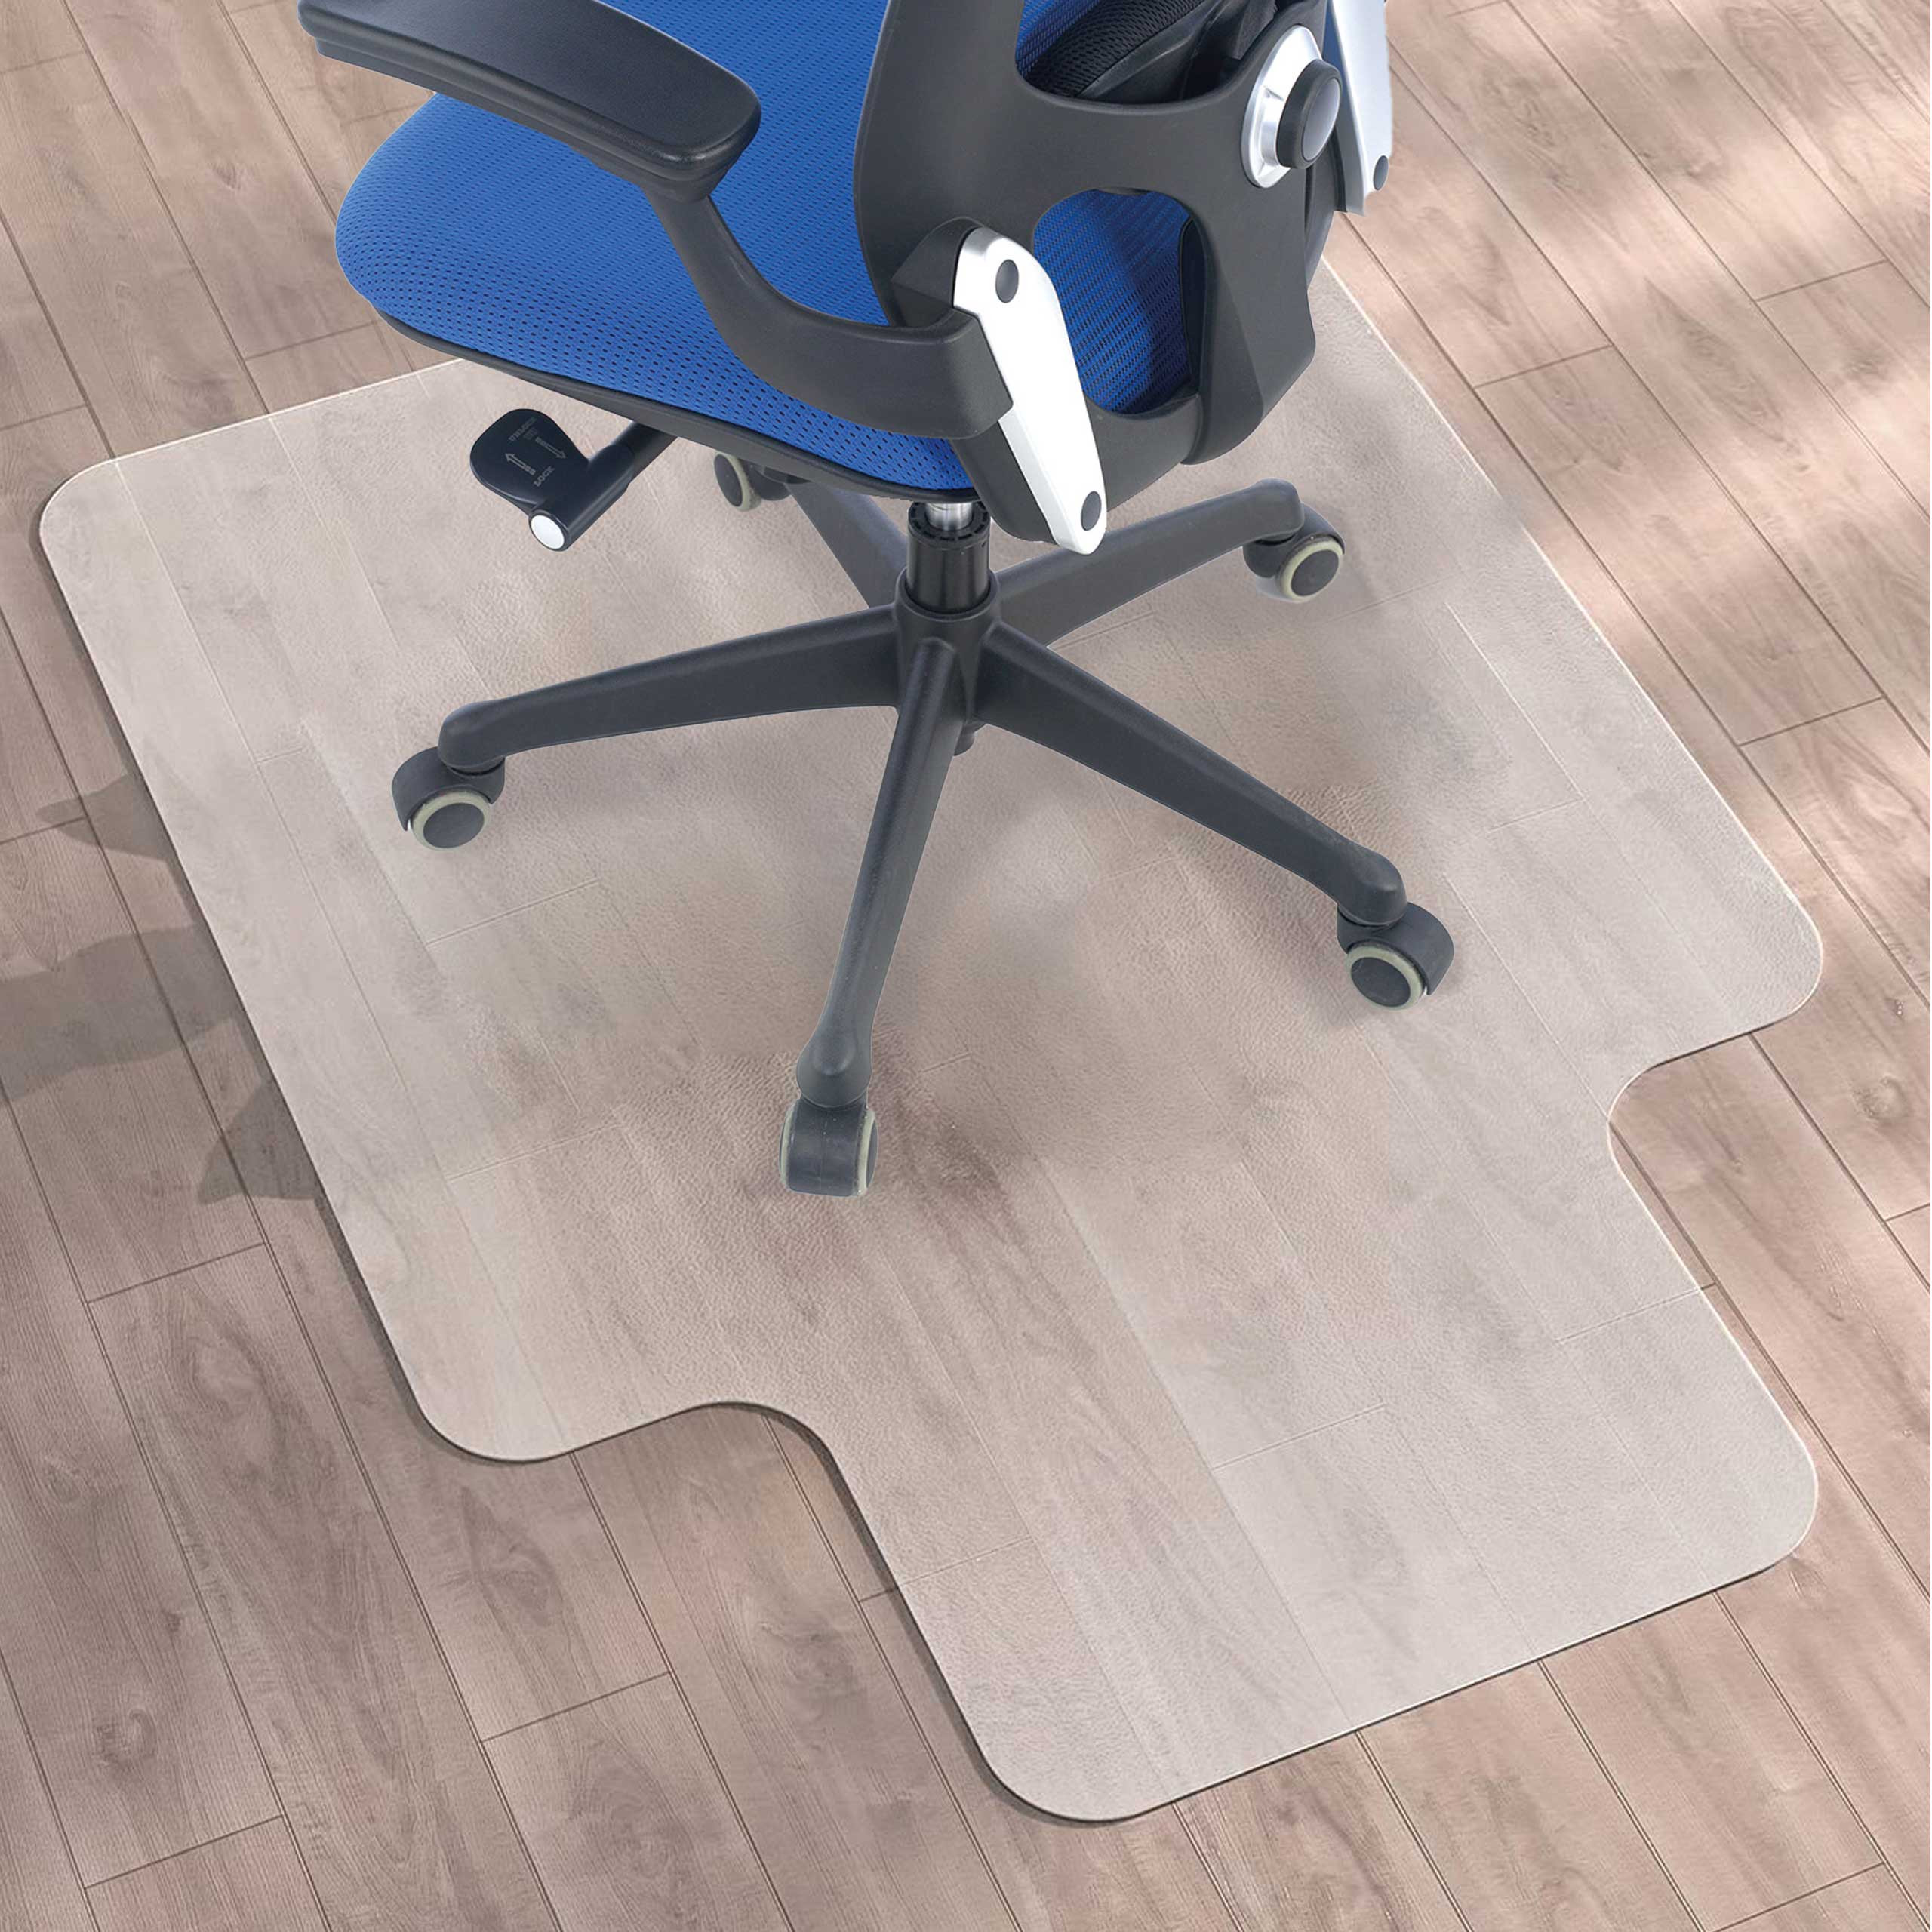  Protector de suelo de PVC transparente para silla de oficina en  alfombra, silla de juego/sillas de salón, protector de alfombra de vinilo  de plástico, antideslizante, impermeable, grandes (tamaño : 55 x